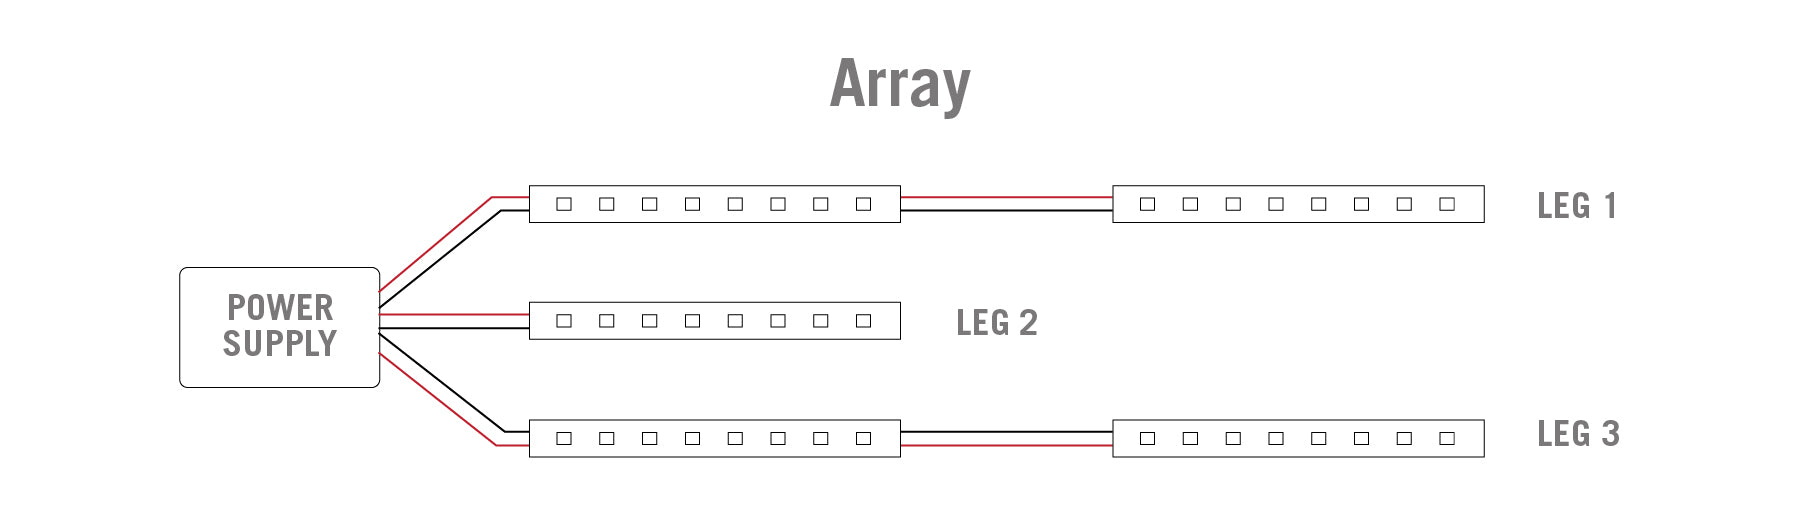 Array configuration